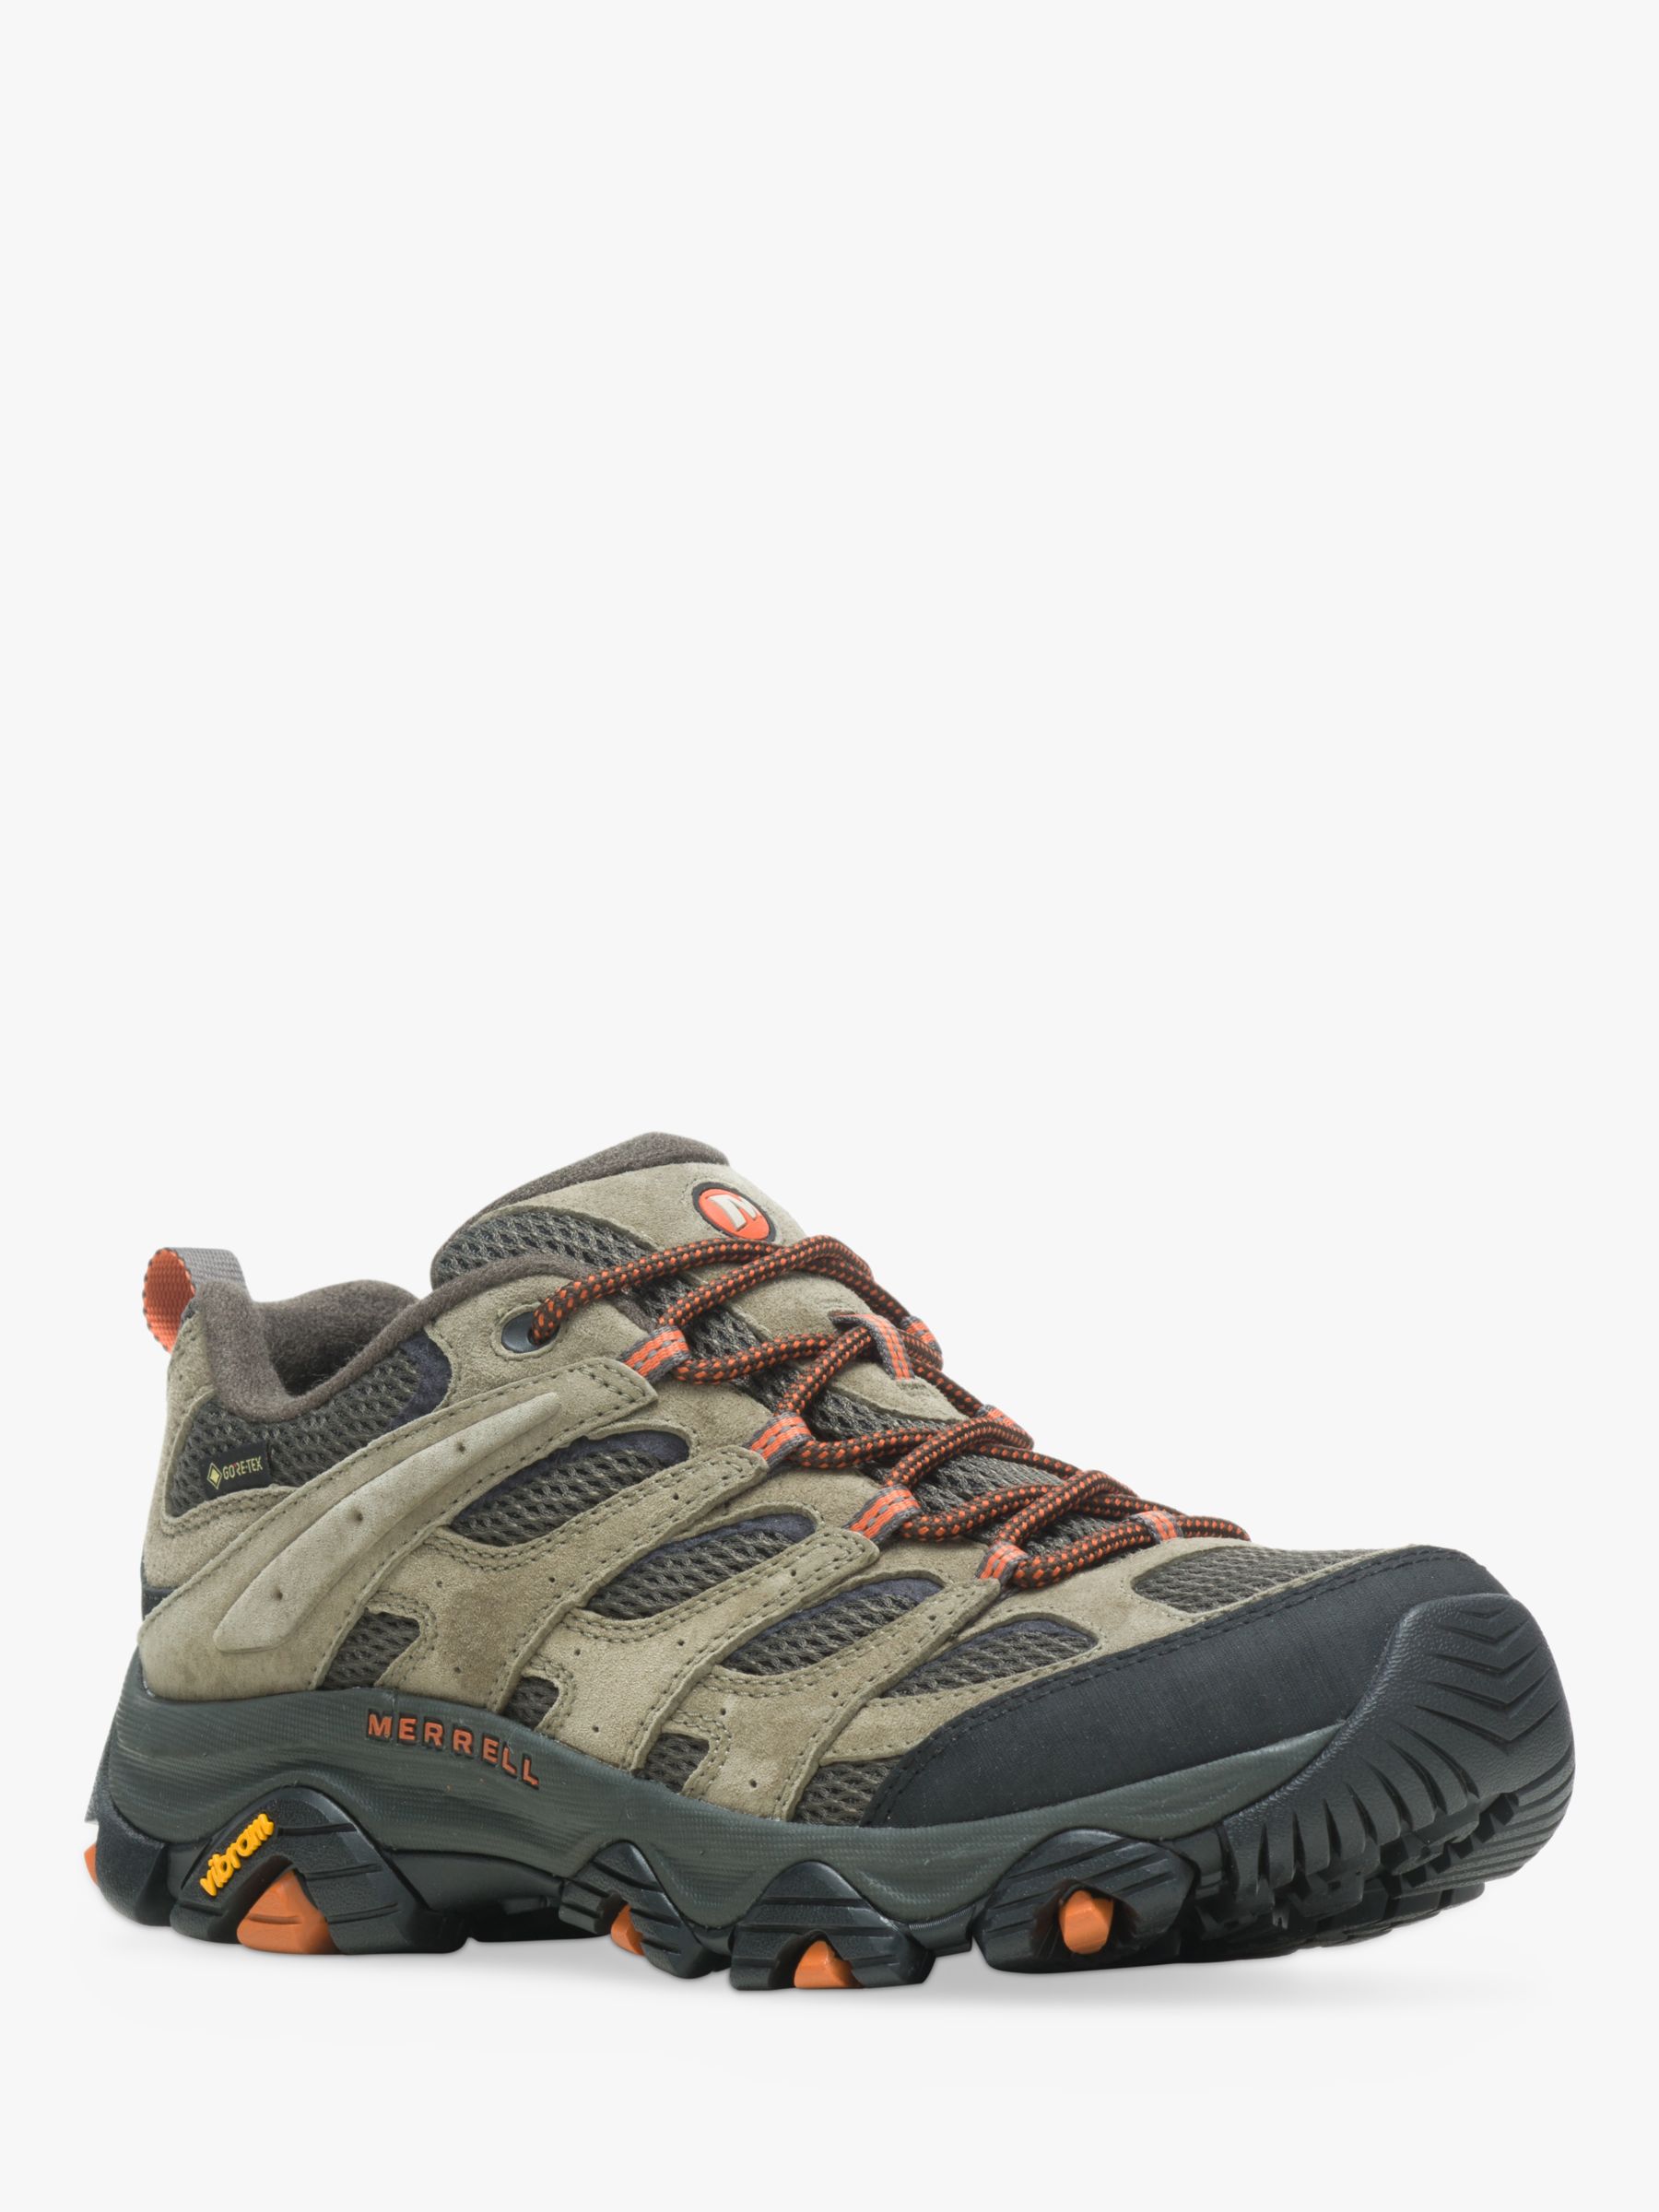 Merrell Moab 3 Gore-Tex Waterproof Hiking Shoes at John & Partners